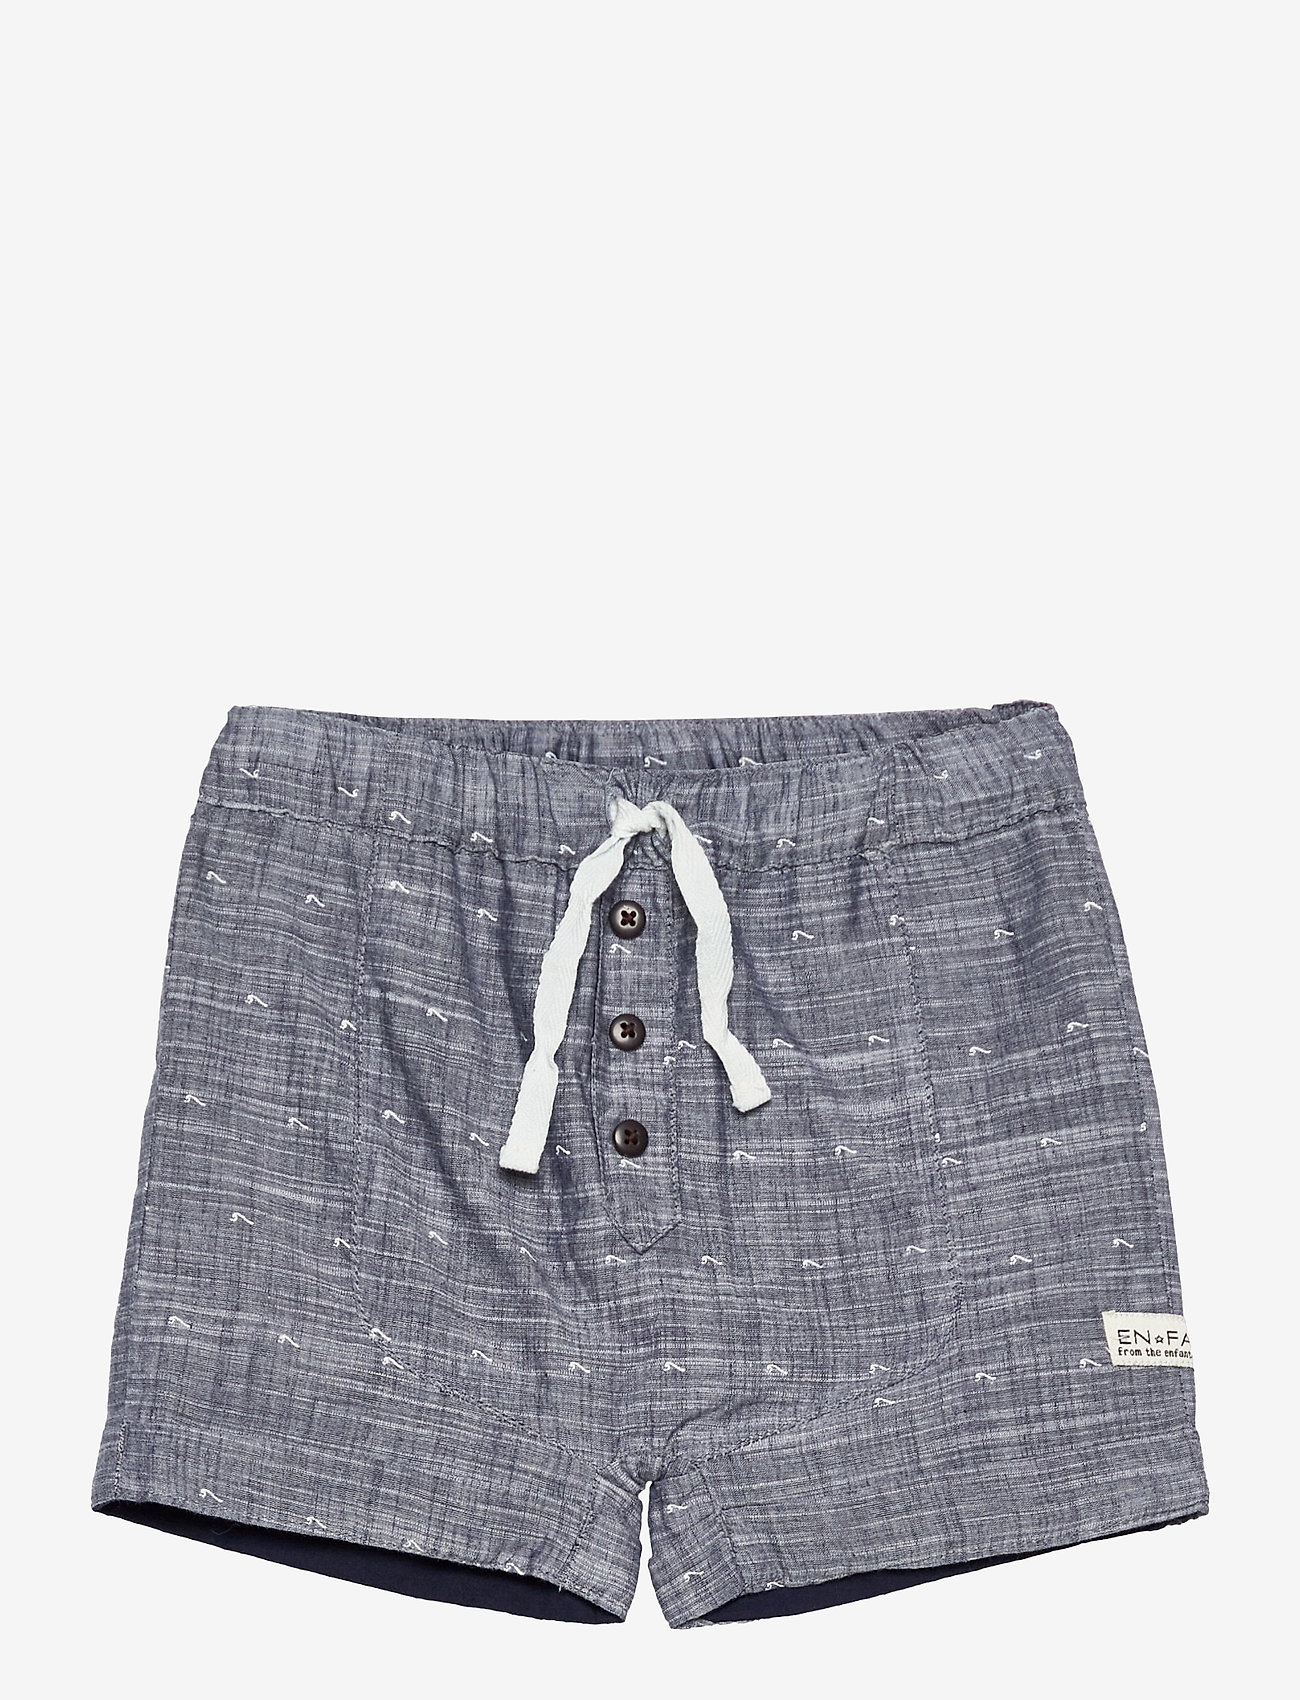 En Fant - Shorts Woven - chino shorts - navy - 0